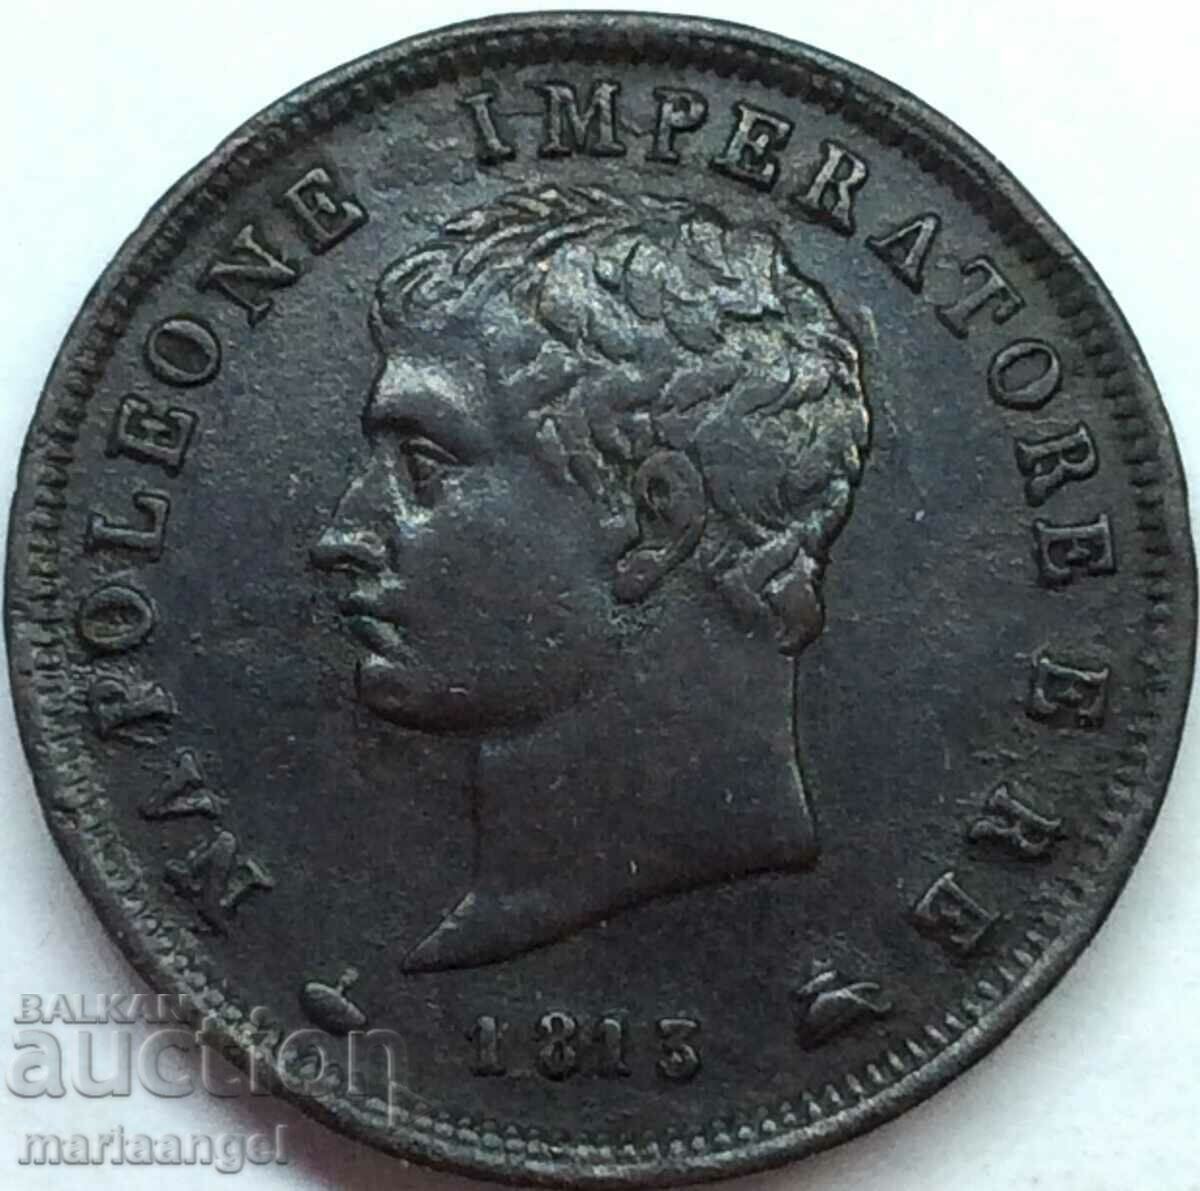 Napoleon 1 soldo 1813 Italy 10 g M - Milan bronze